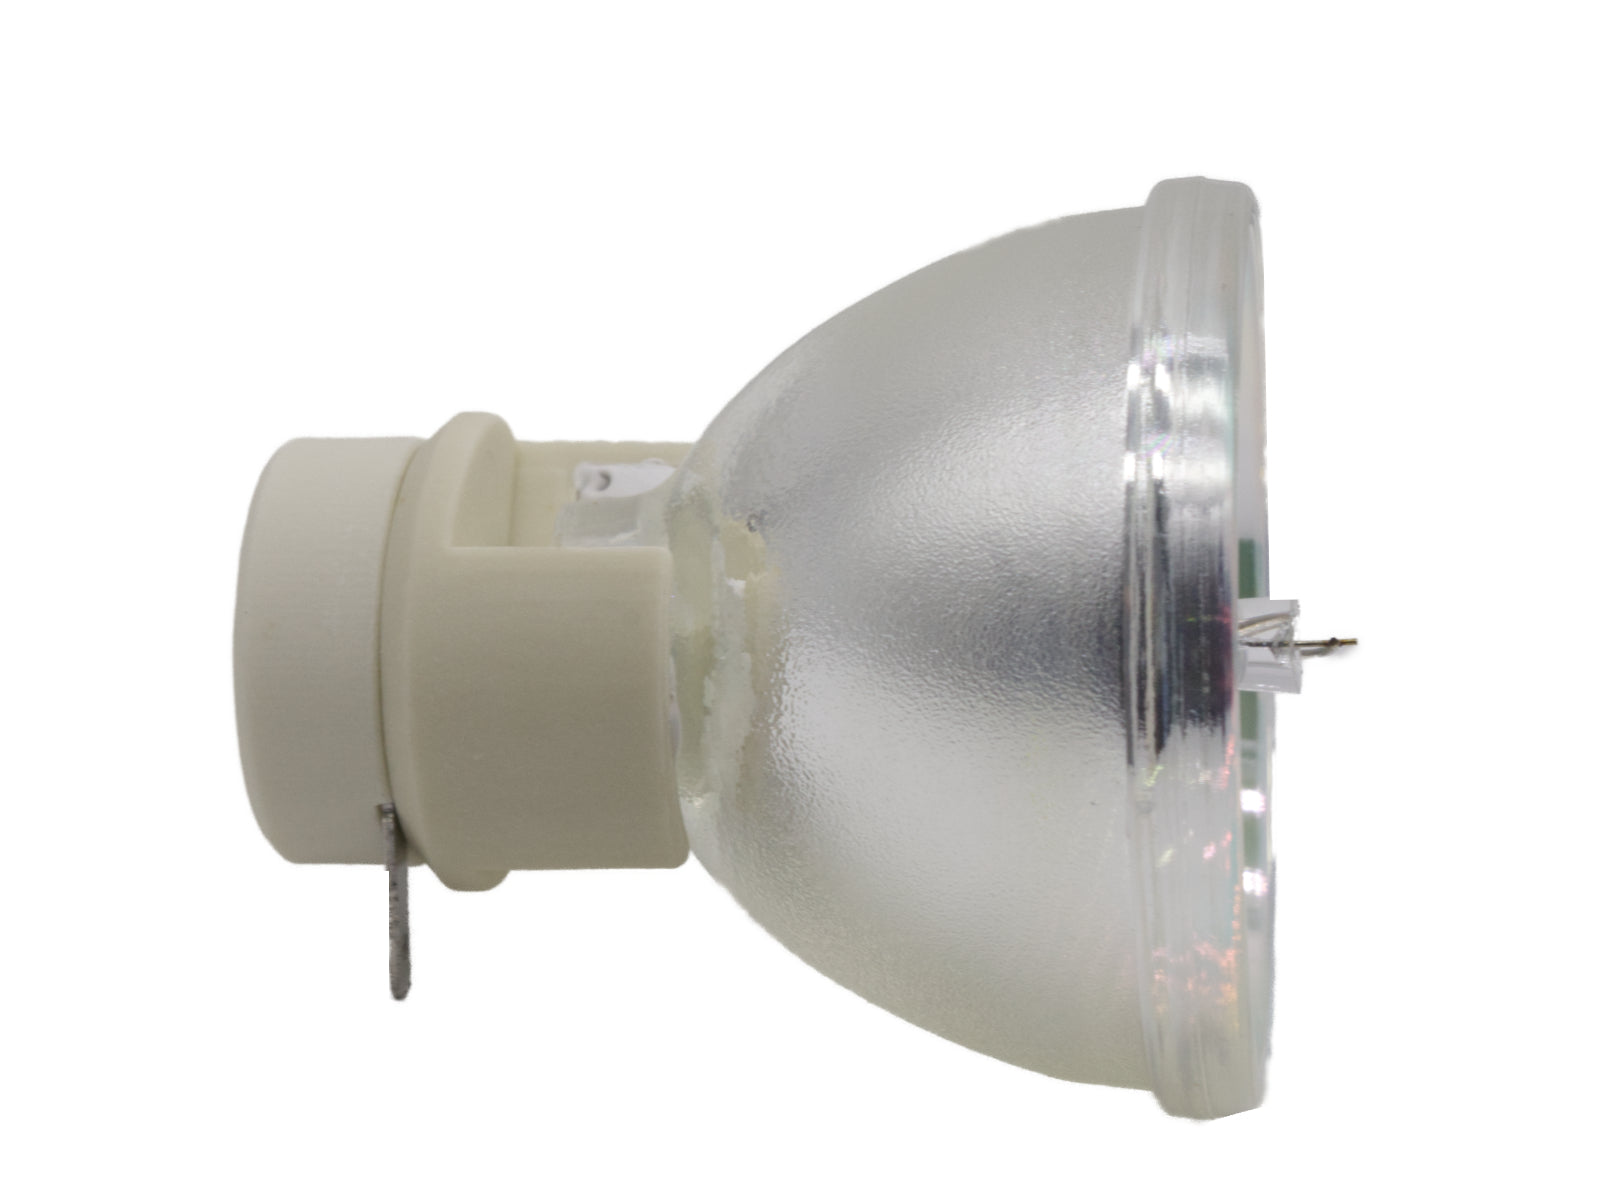 azurano Beamerlampe für ACER MC.JH411.002 Ersatzlampe Projektorlampe - Bild 3